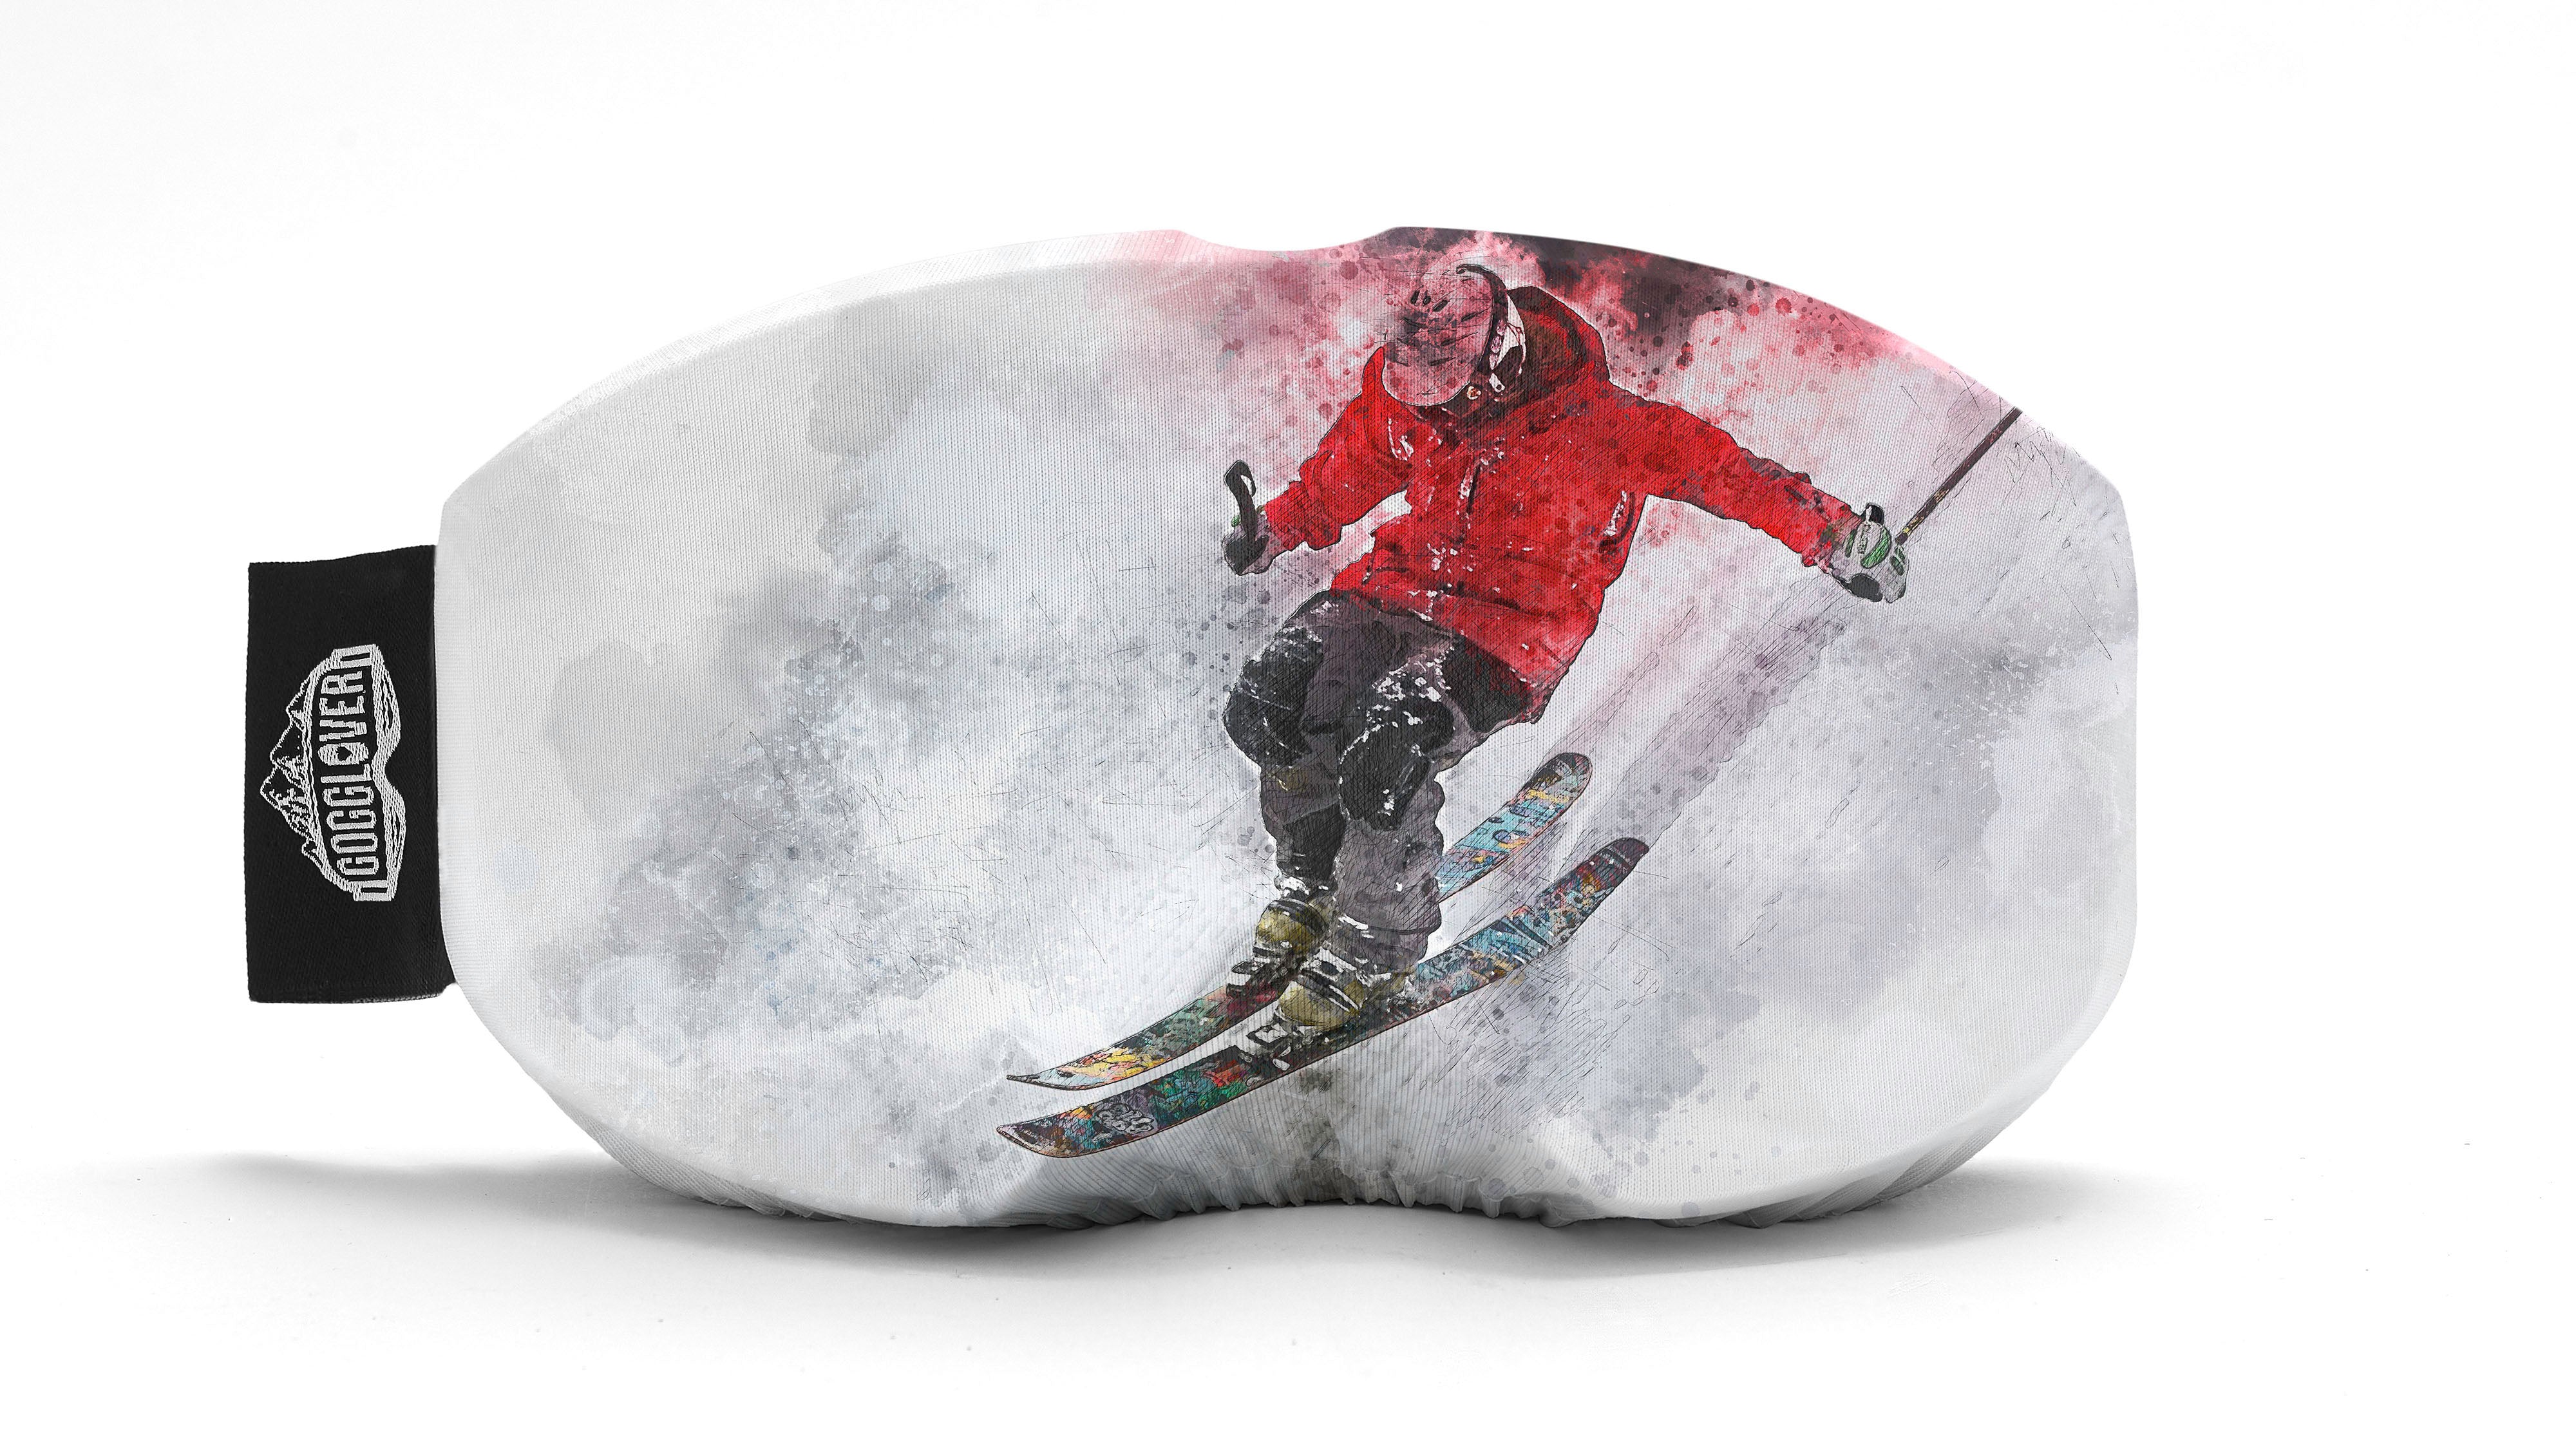 Skier gogglover protective ski goggle cover